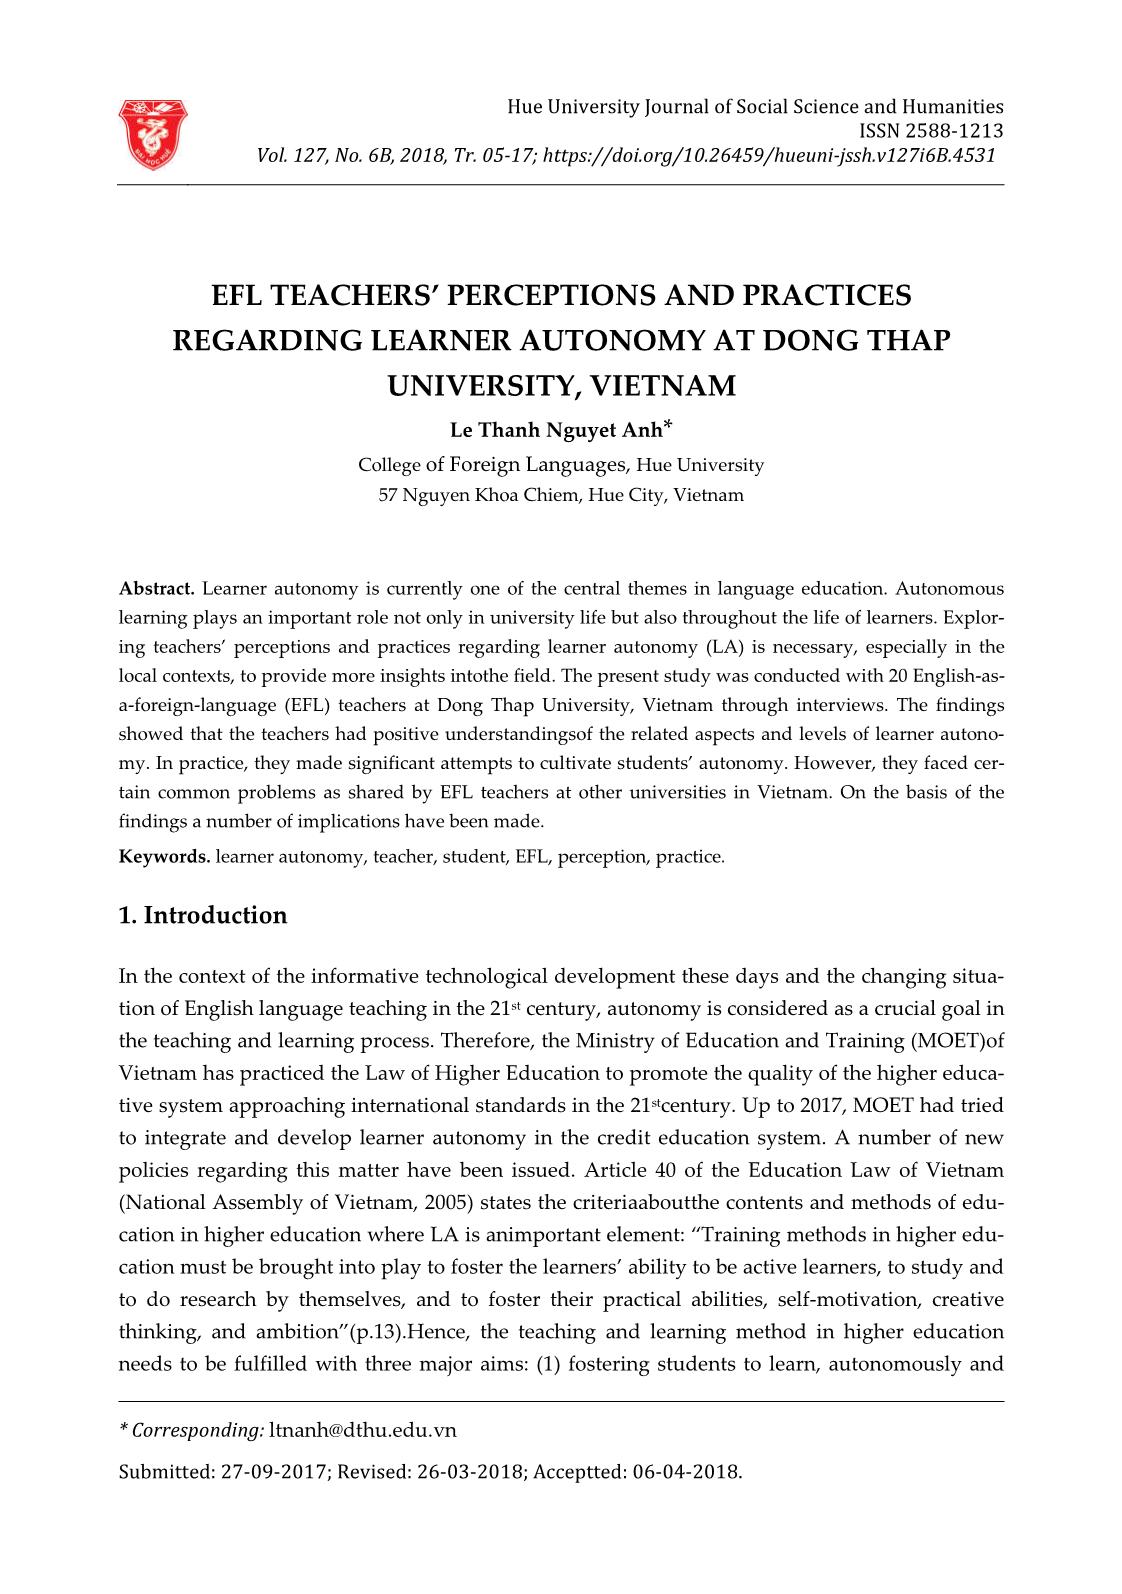 EFL teachers’ perceptions and practices regarding learner autonomy at Dong Thap University, Vietnam trang 1